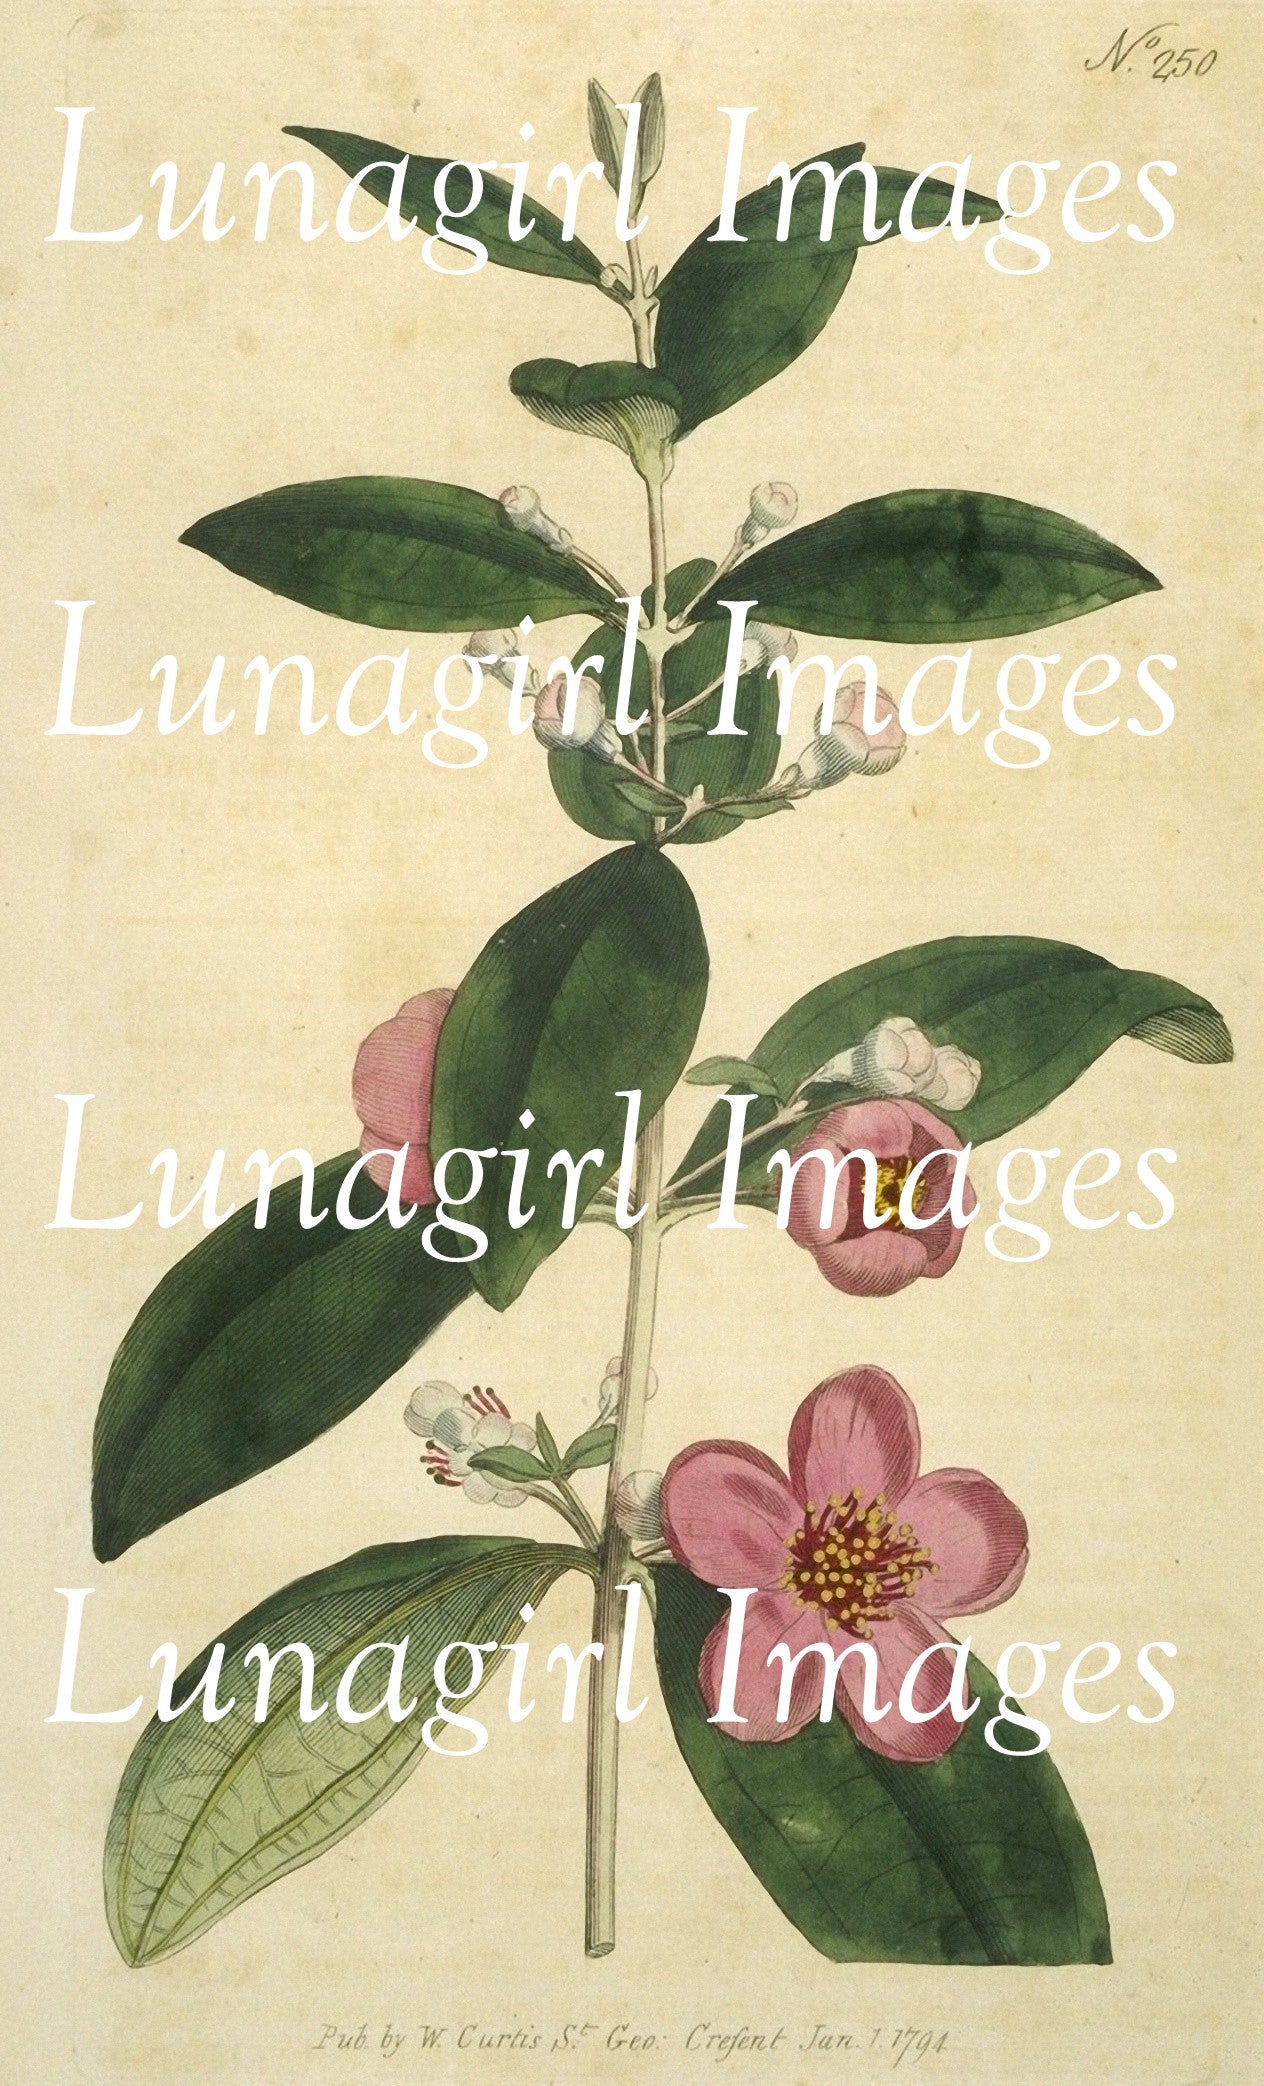 Cape Jasmine Flower Botanical Print Digital Art by Visual Design